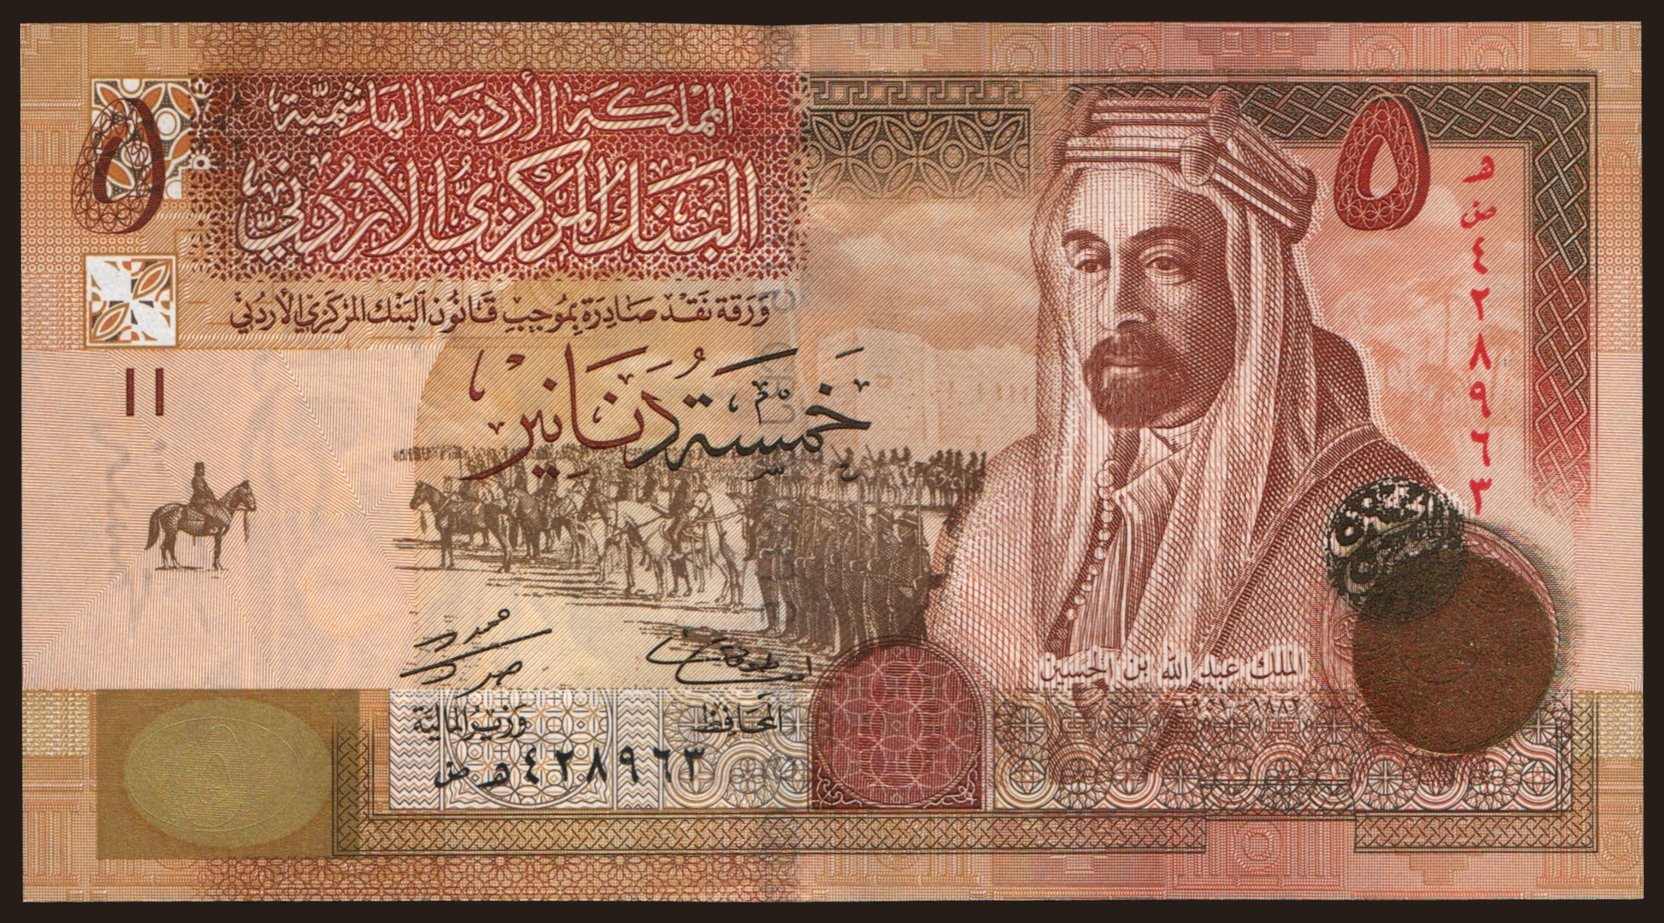 5 dinars, 2010